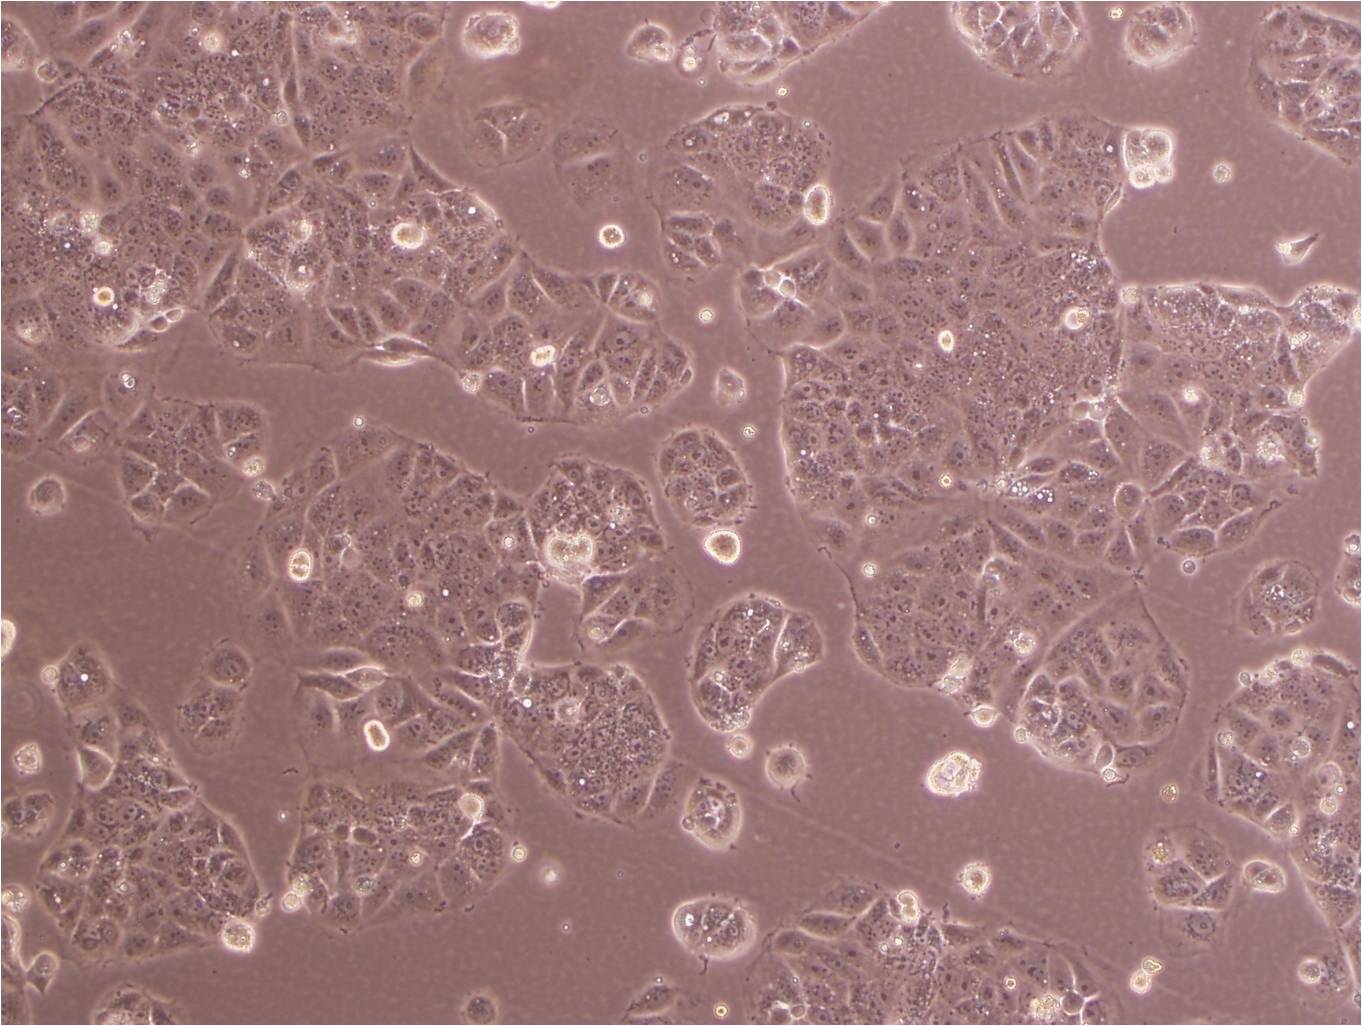 MZ-CRC-1 epithelioid cells人髓样甲状腺癌细胞系